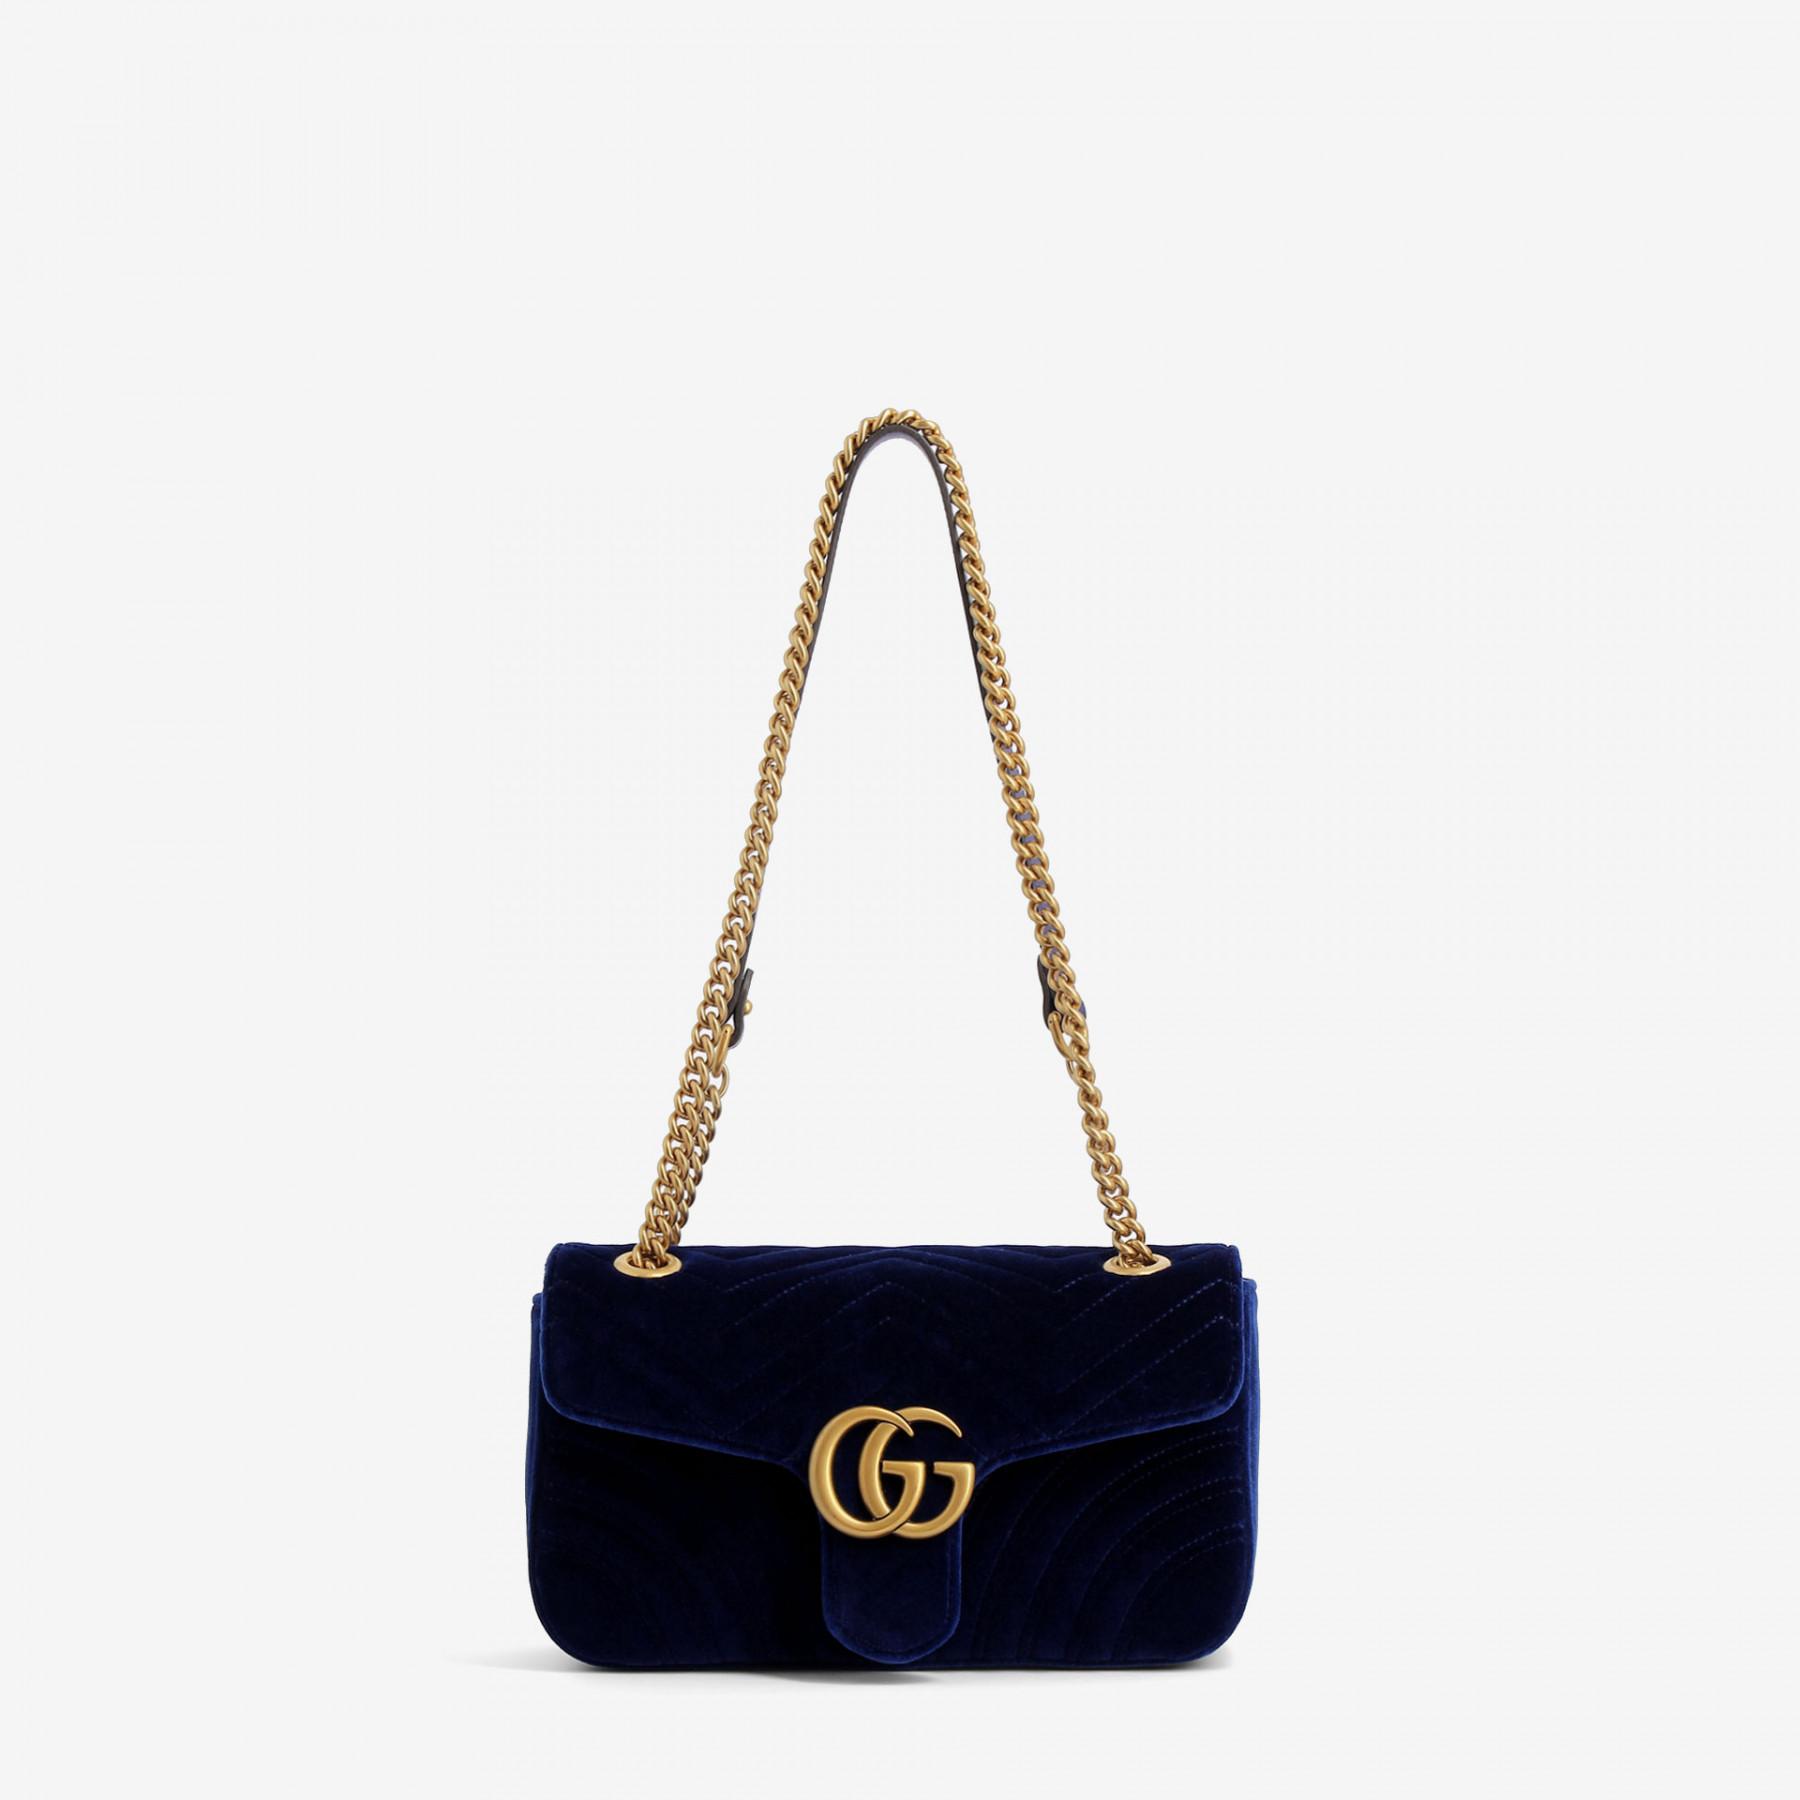 Lyst - Gucci Gg Marmont Velvet Bag in Blue